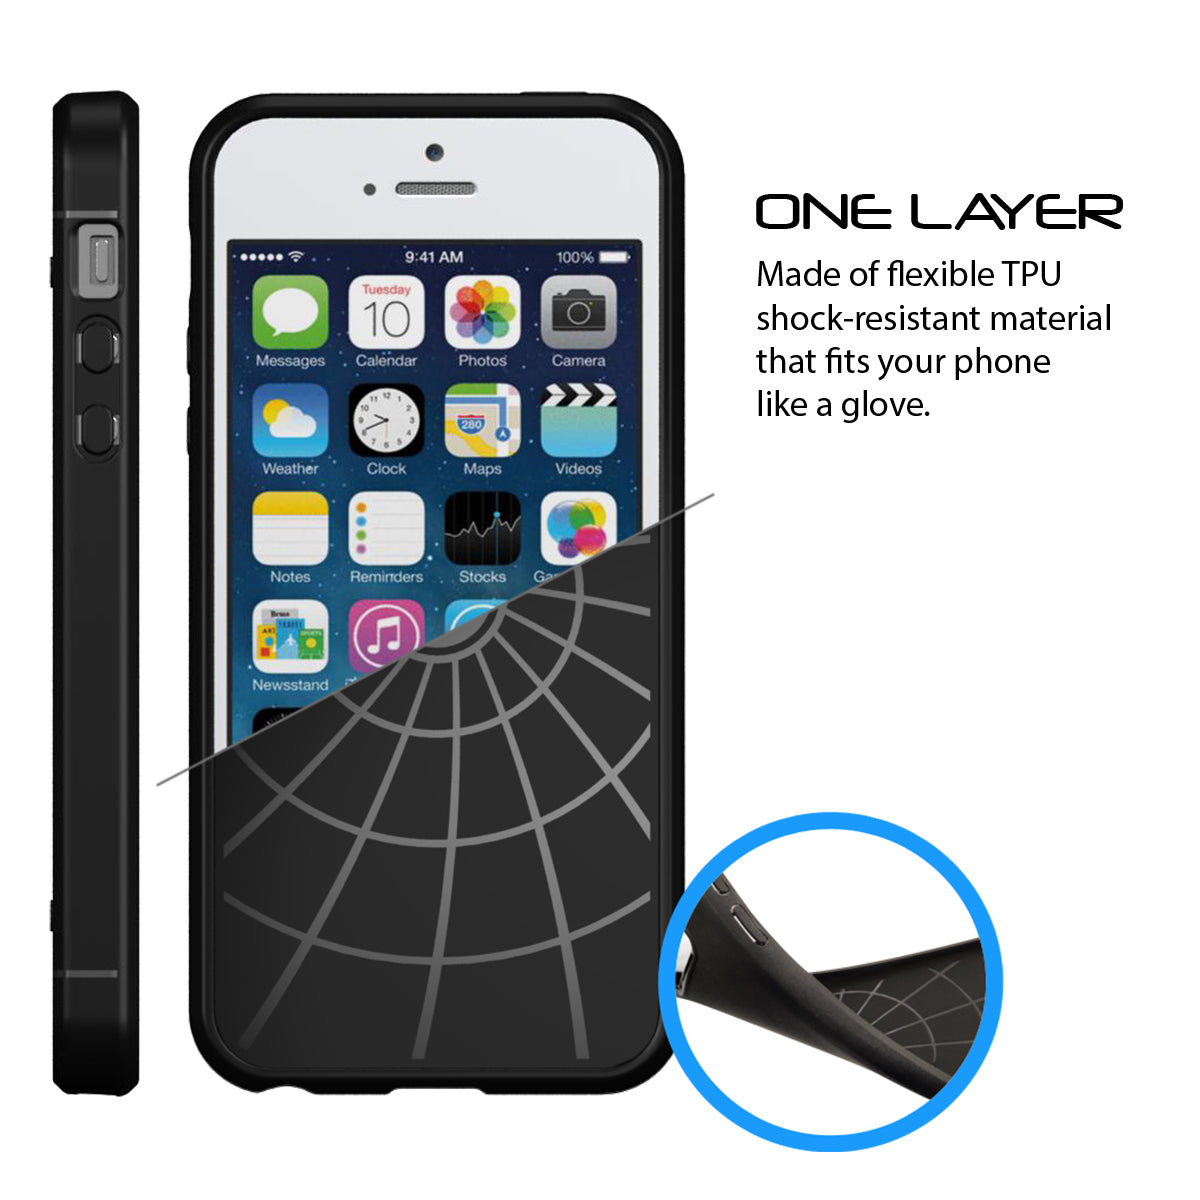 LUVVITT SLEEK ARMOR iPhone 5 SE Case | Dual Layer Back Cover - Black (2016 only)